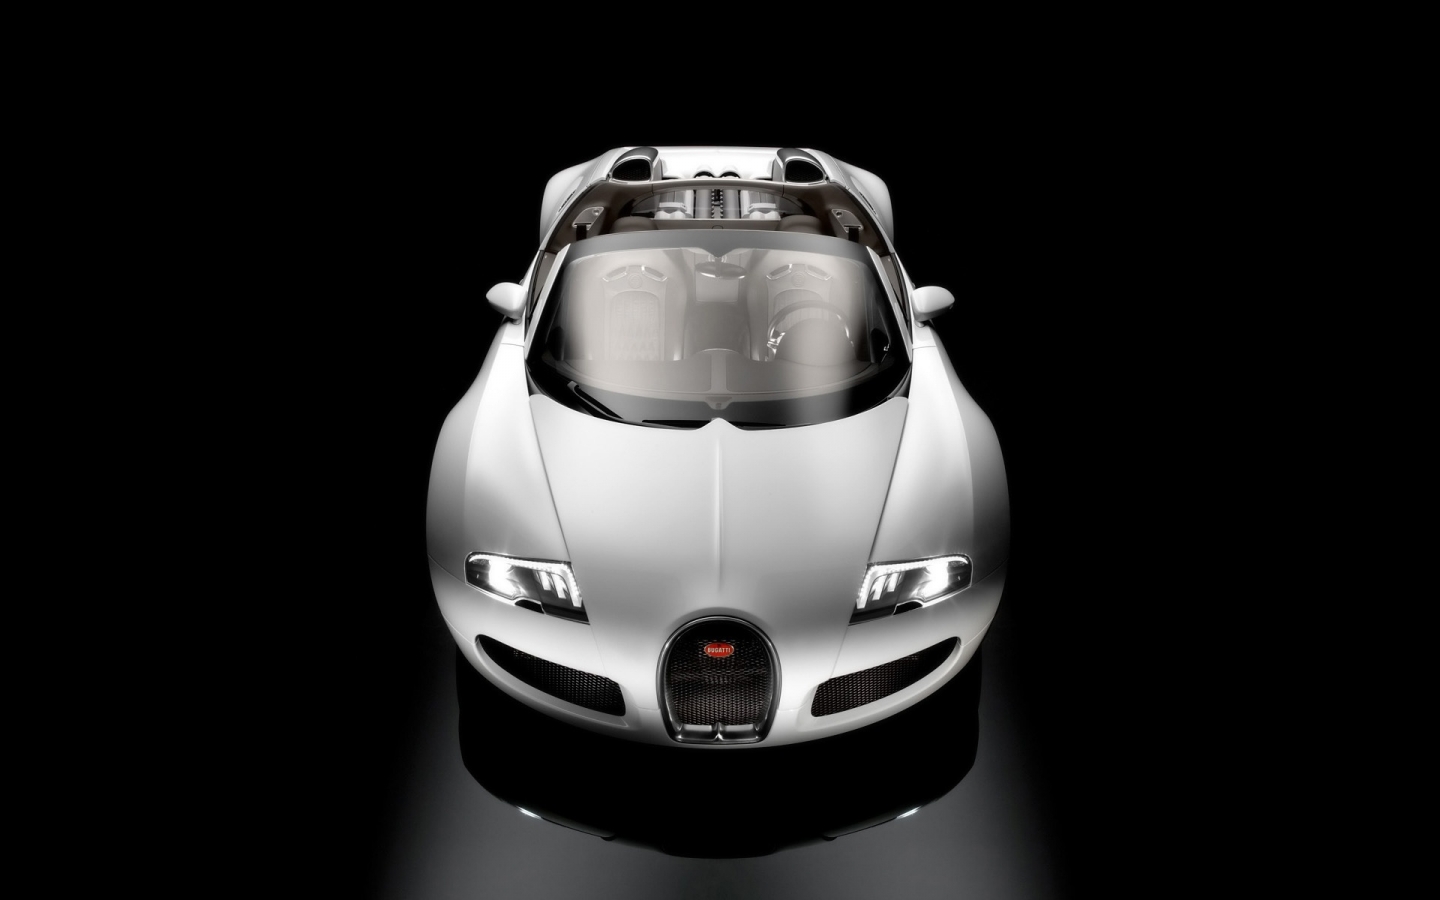 Bugatti Veyron 16.4 Grand Sport Production Version 2009 - Studio Front Top for 1440 x 900 widescreen resolution